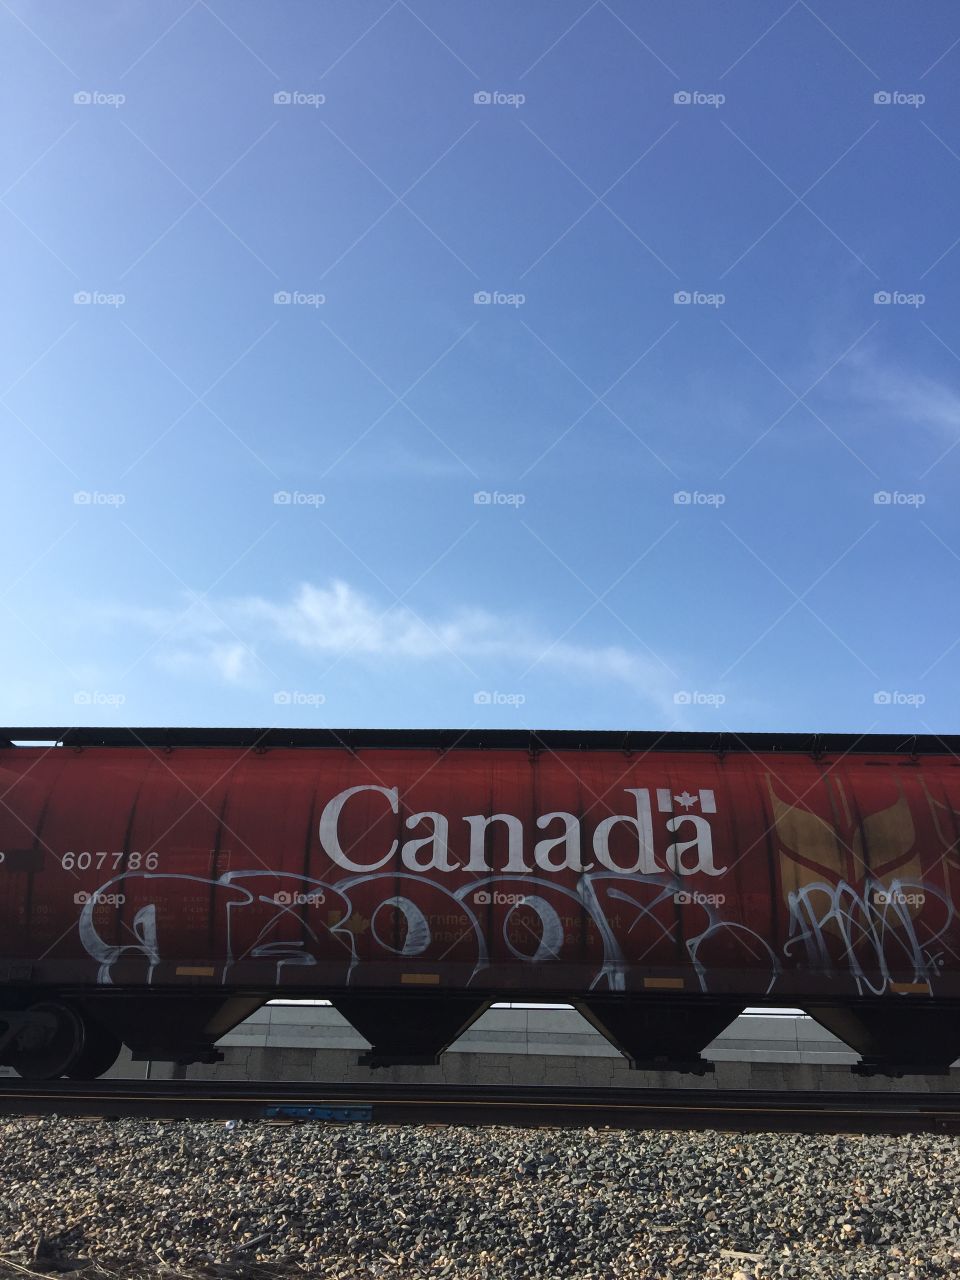 Graffiti train canada 